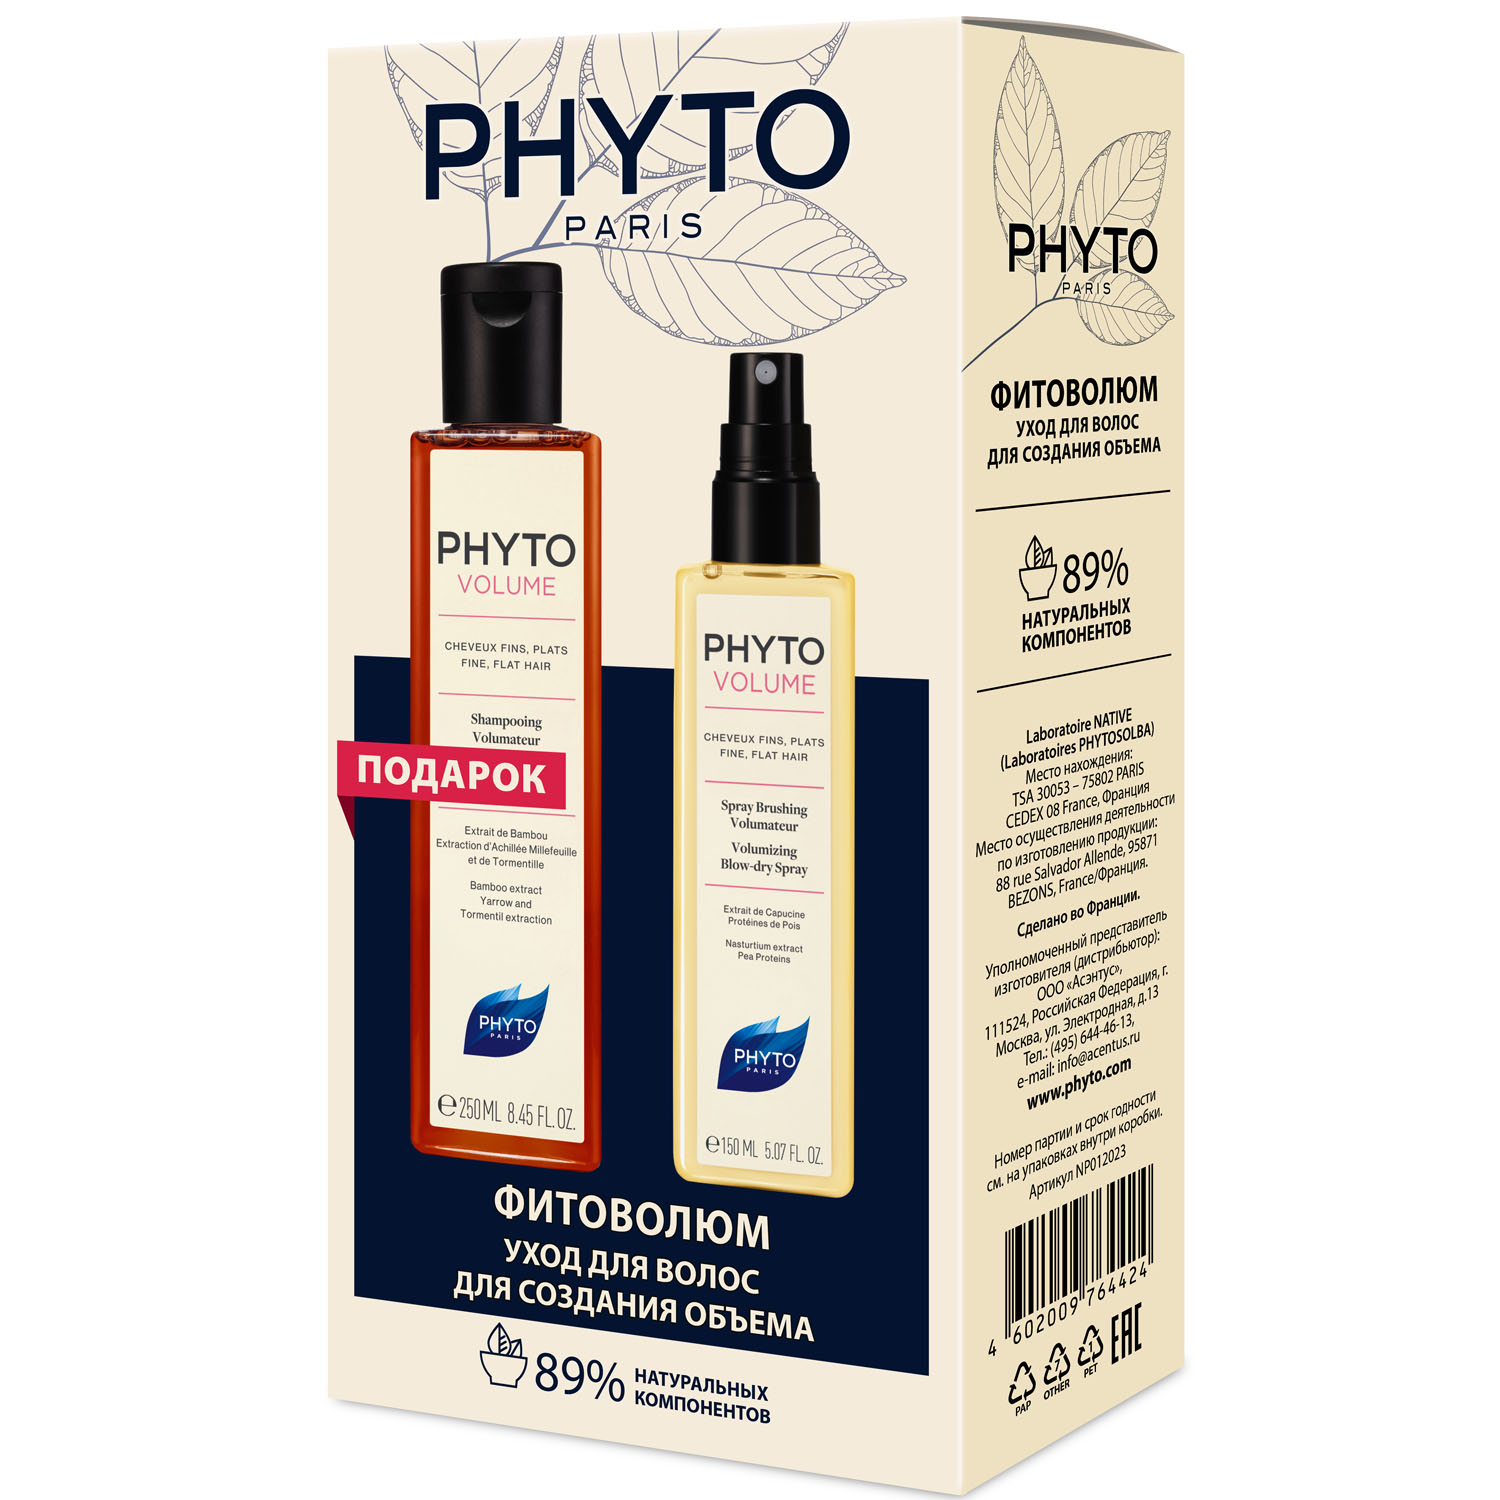 Phyto Набор для создания объема: спрей для укладки 150 мл + шампунь для создания объема 250 мл (Phyto, Phytovolume) phyto набор для создания объема спрей для укладки 150 мл шампунь для создания объема 250 мл phyto phytovolume